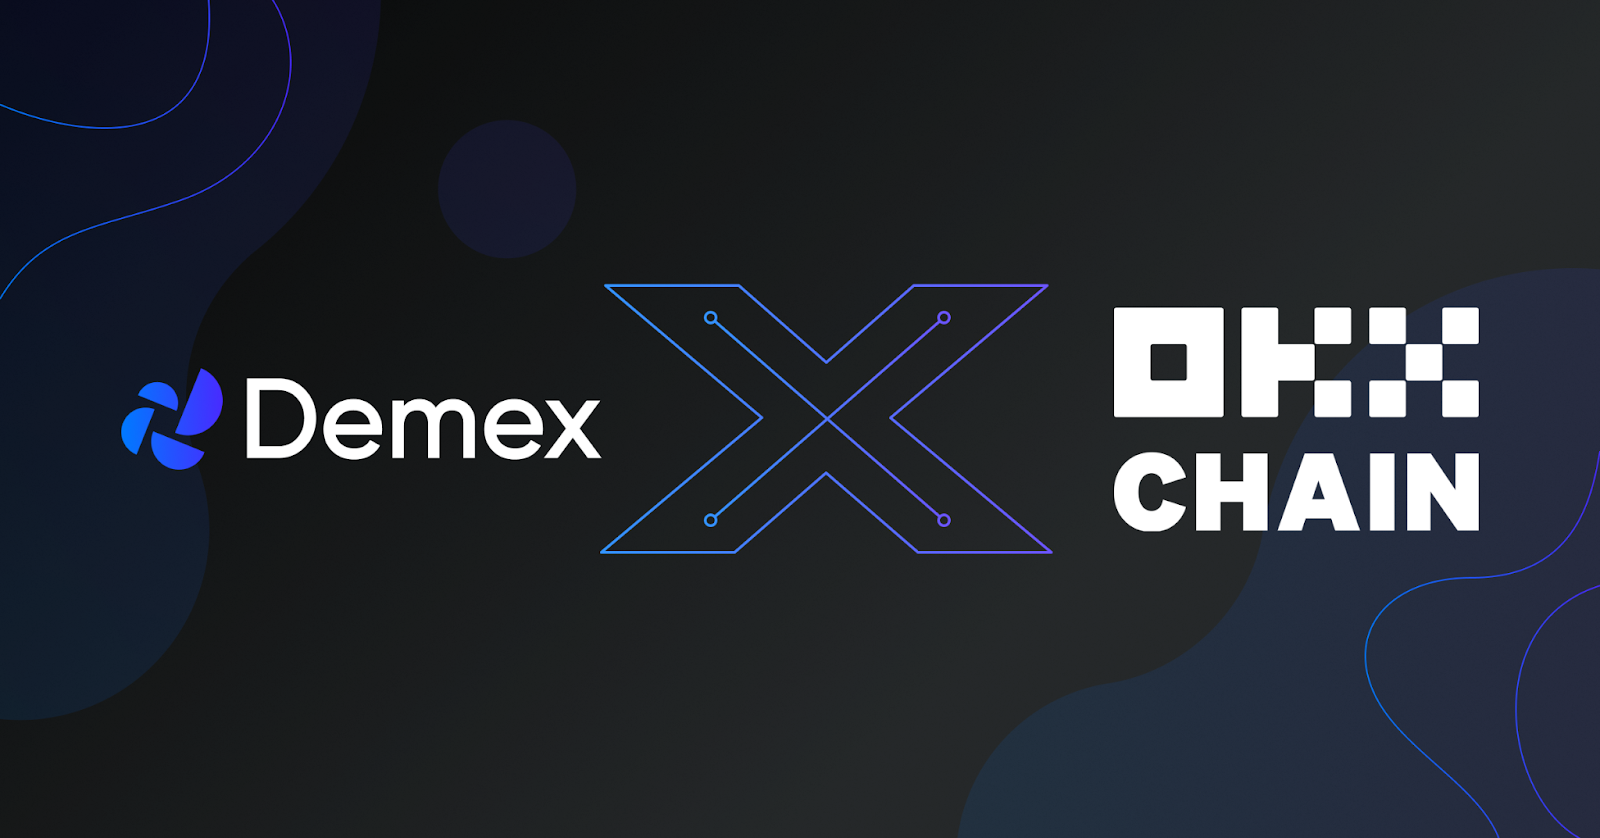 Demex Integrates with OKTC (OKT Chain), a Leading L1 Blockchain Network